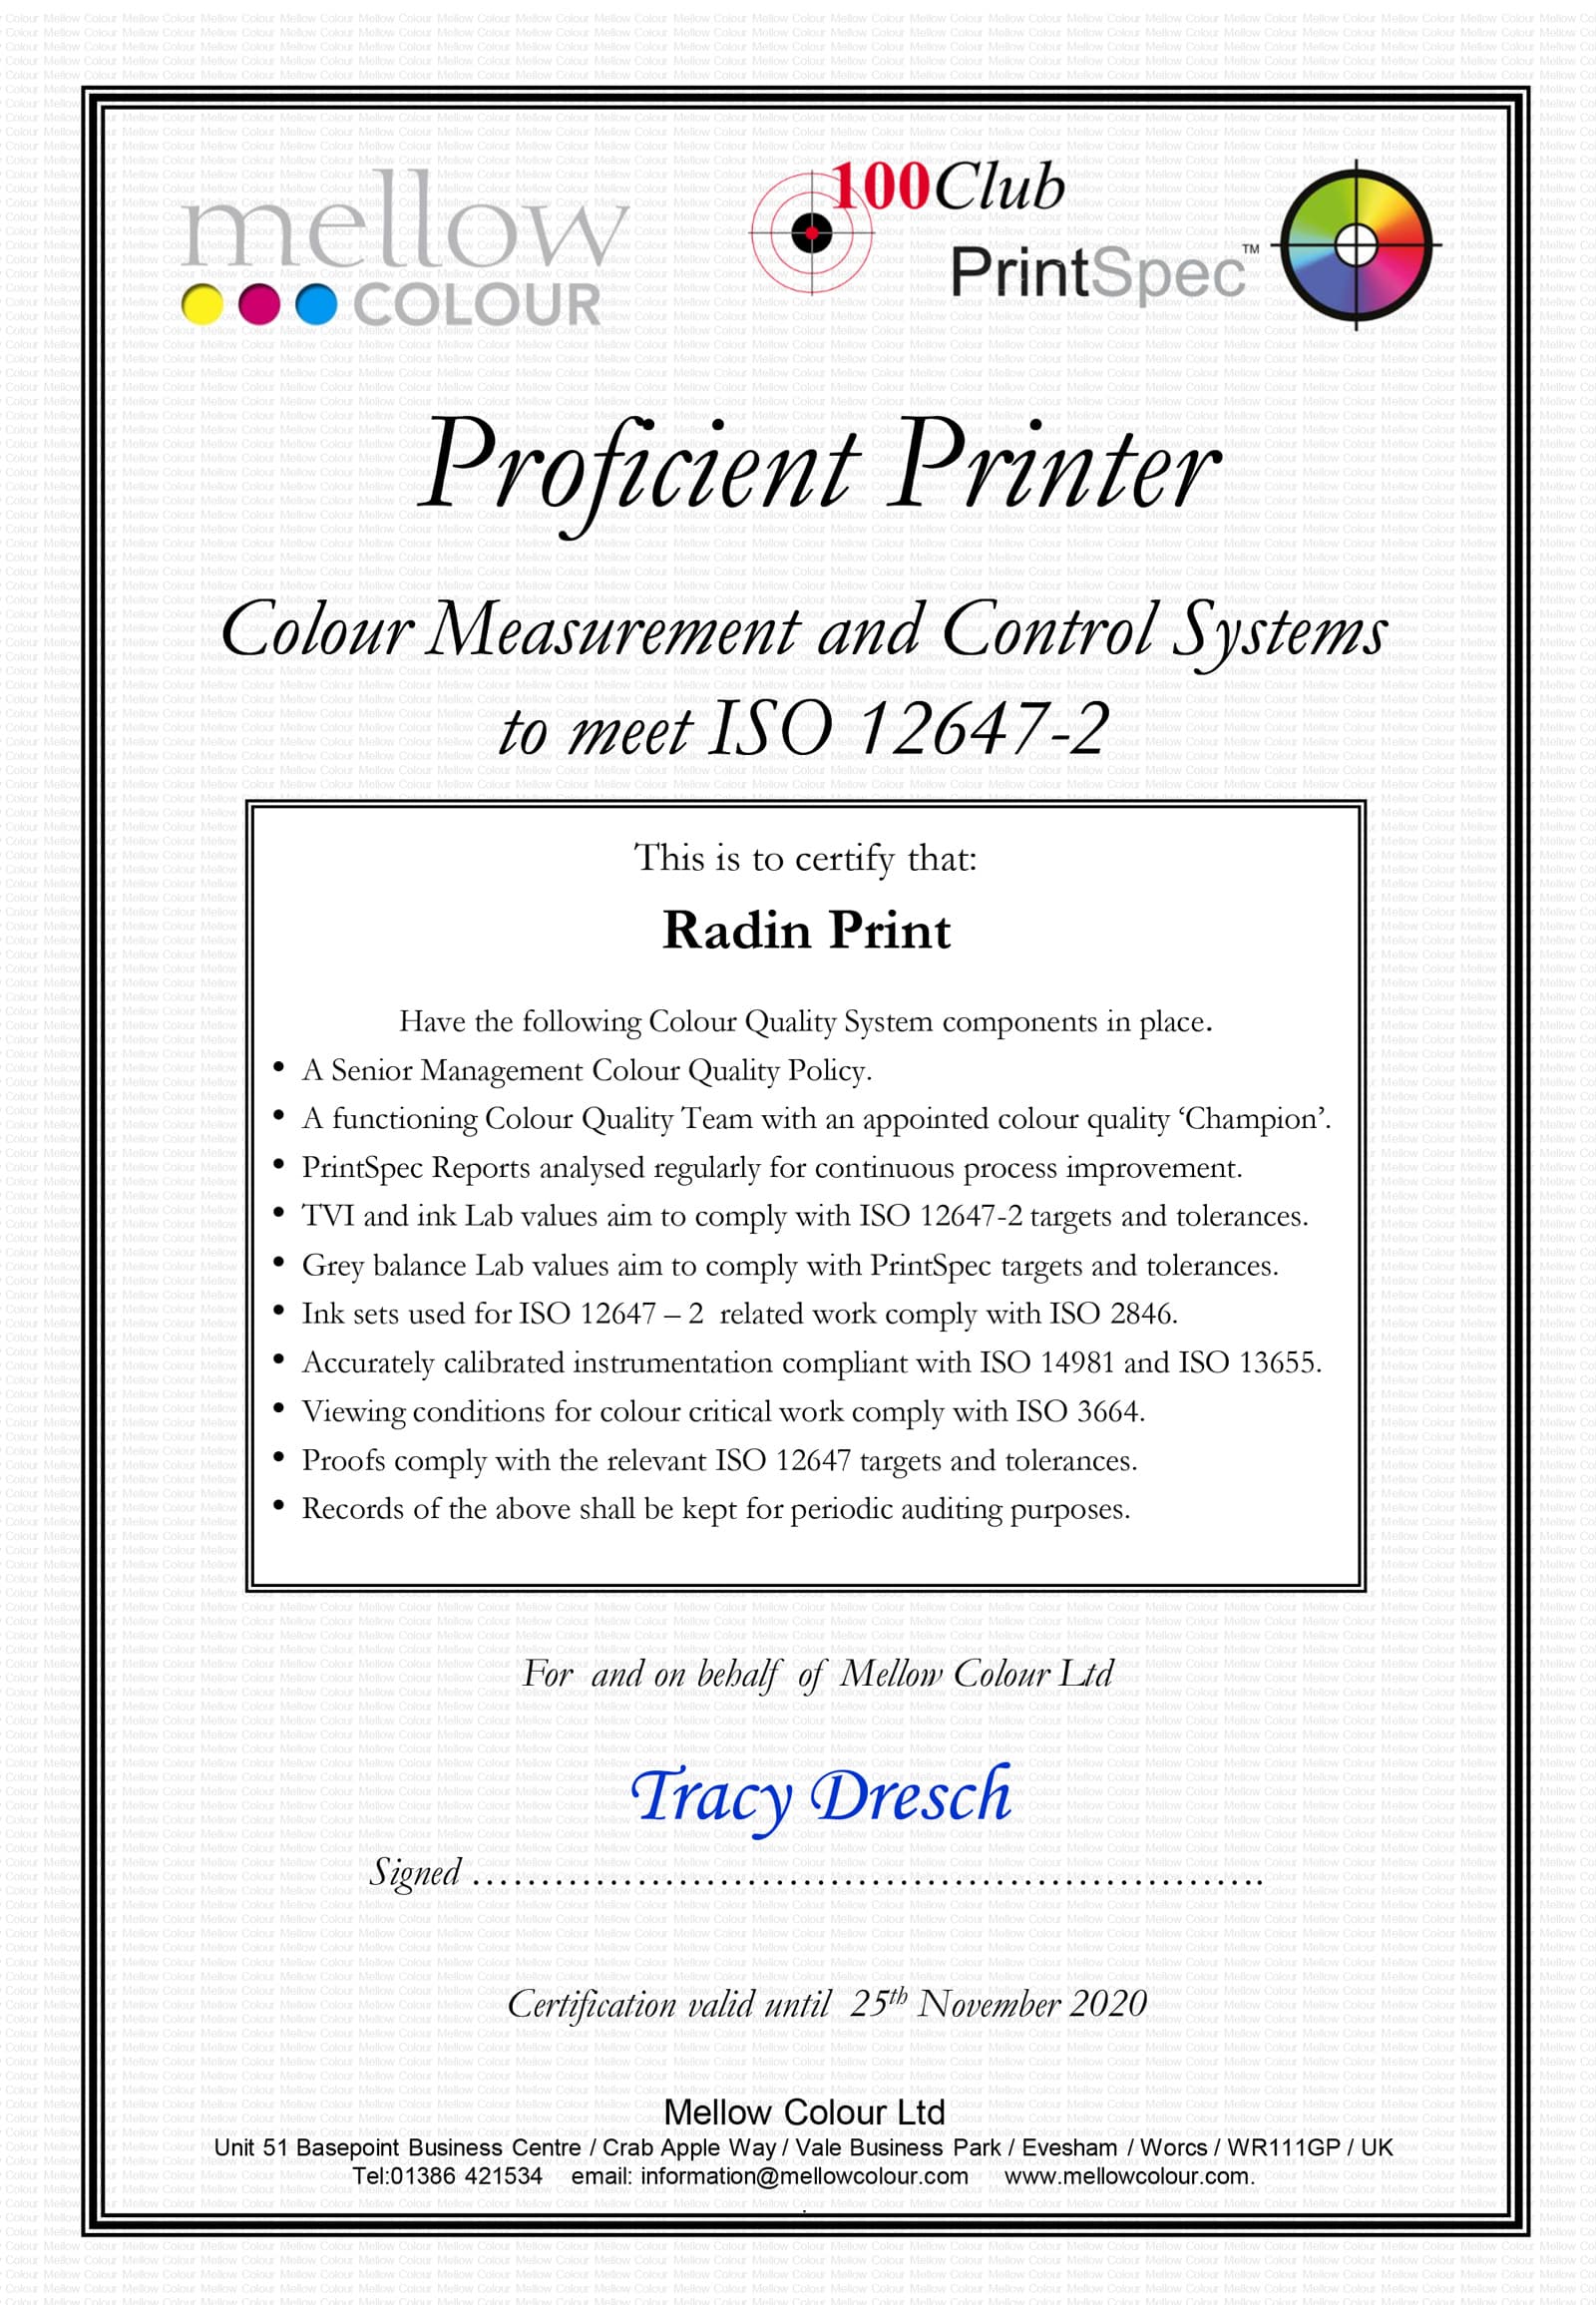 Radin - LIDL 2019 Proficient Printer Certificate